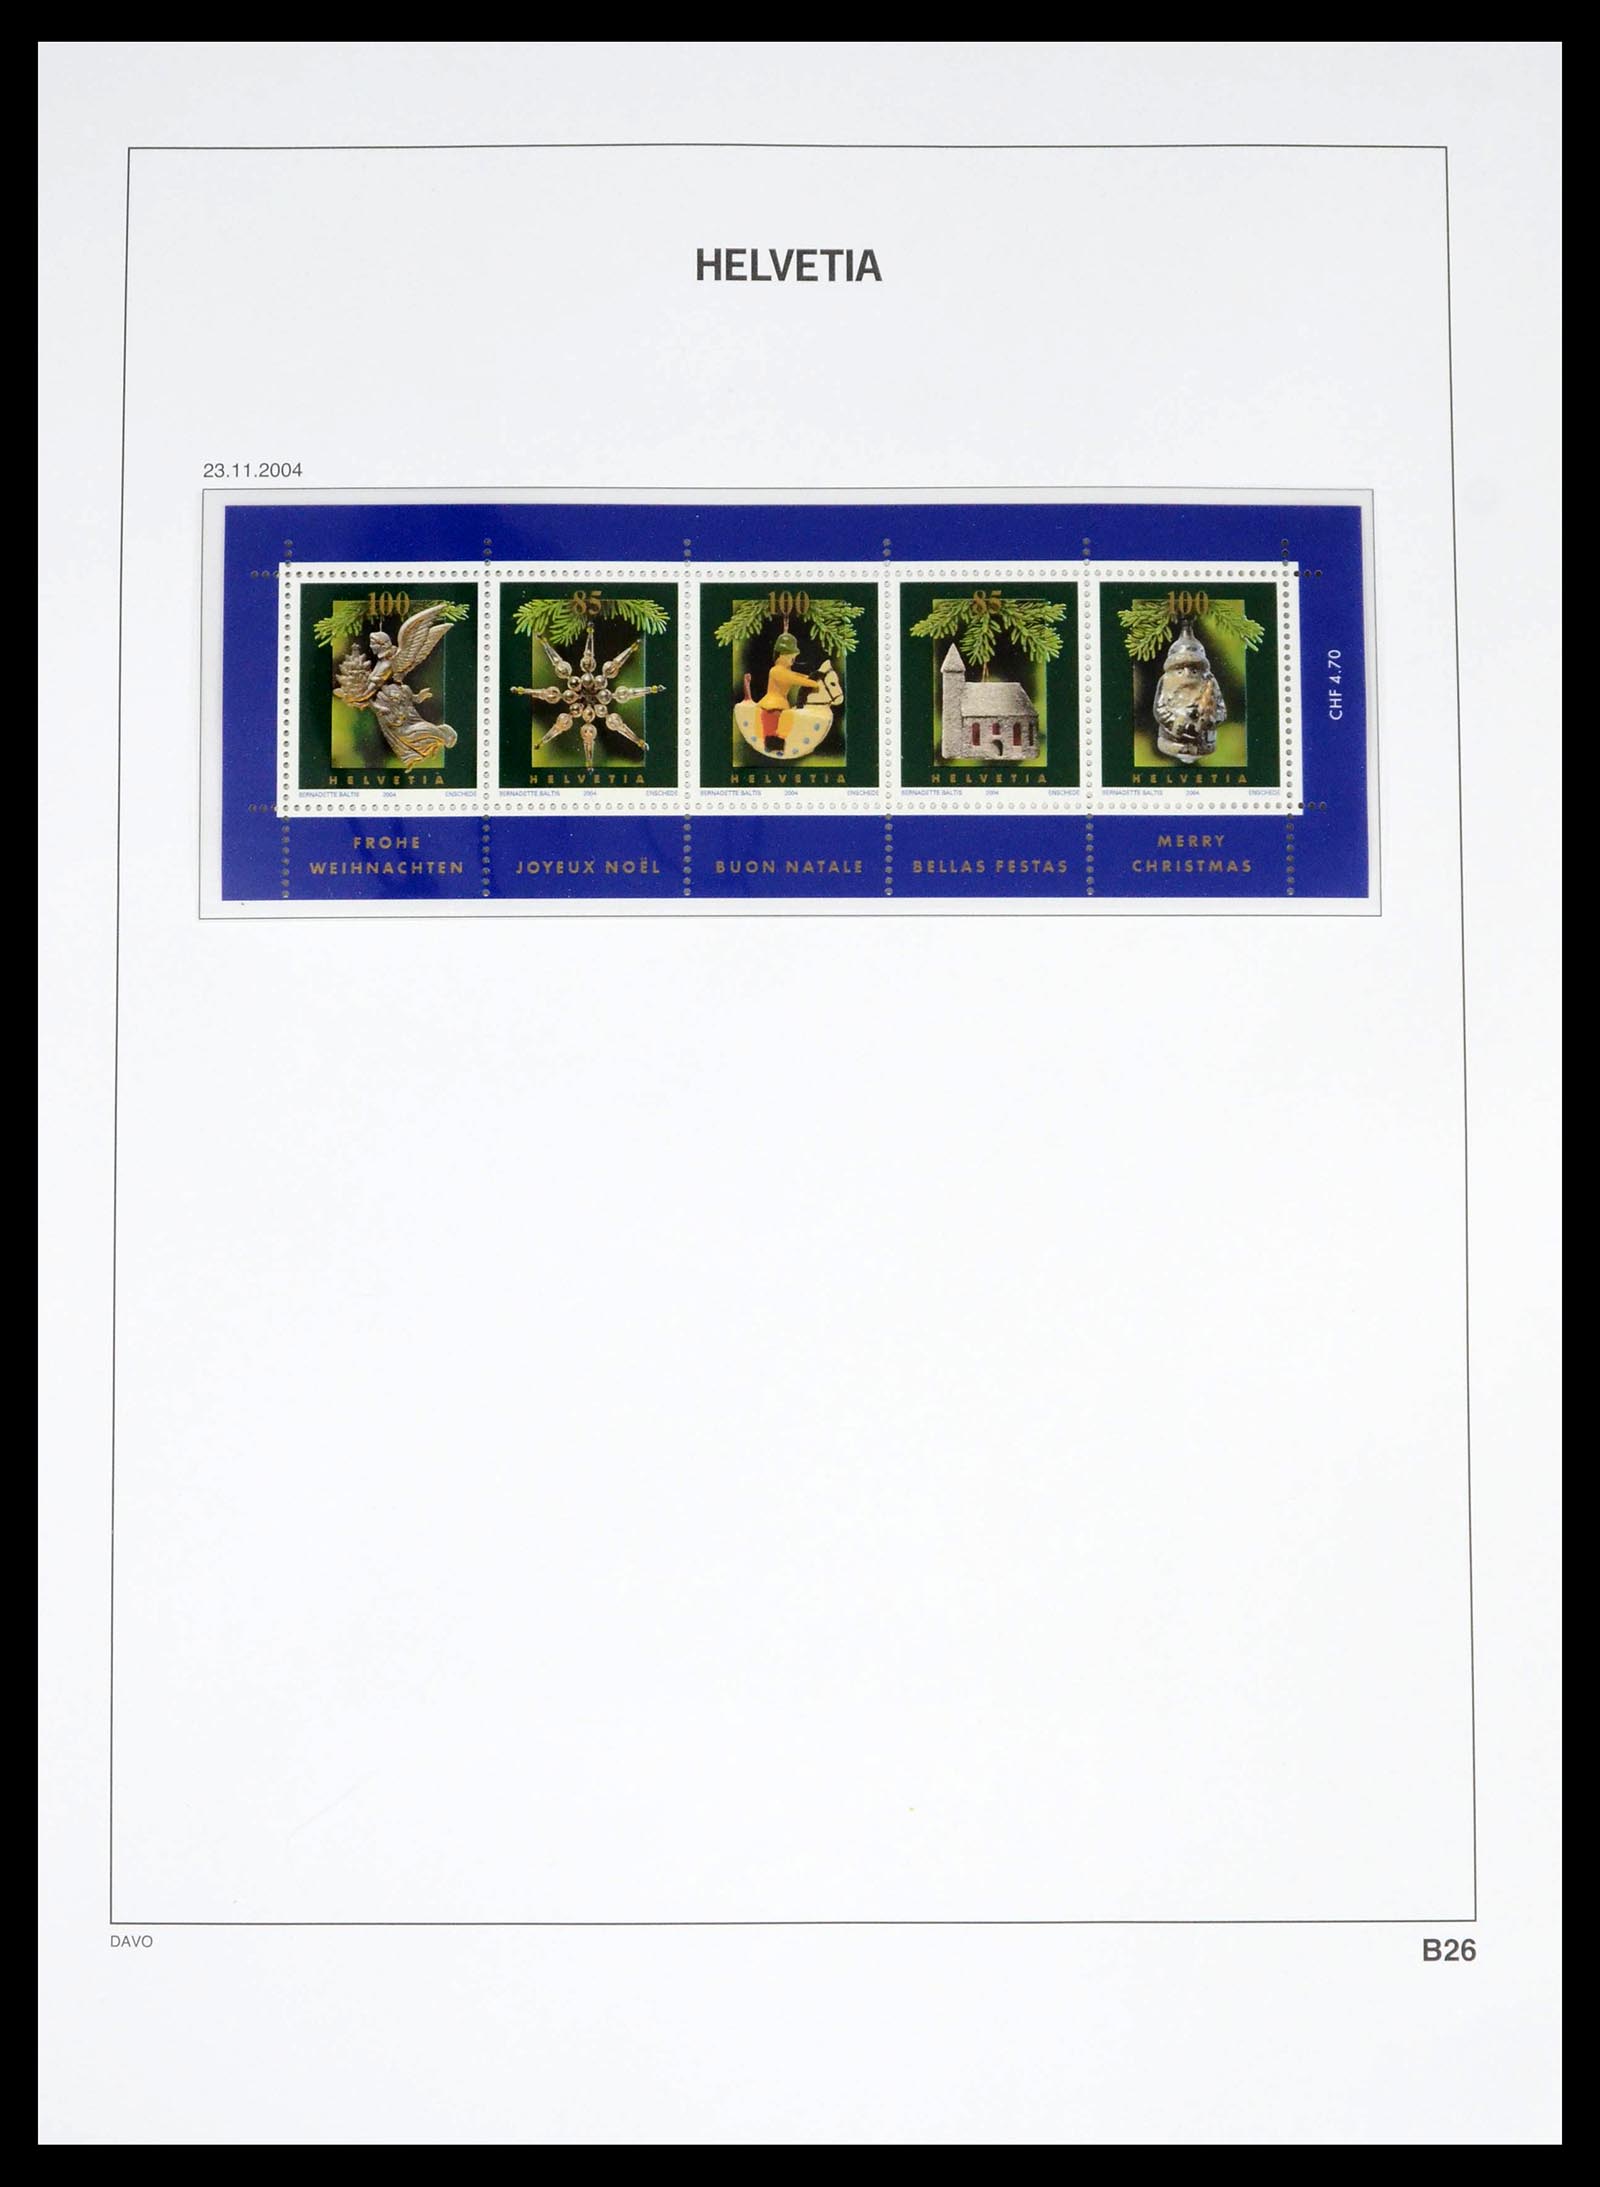 39363 0183 - Stamp collection 39363 Switzerland 1939-2013.